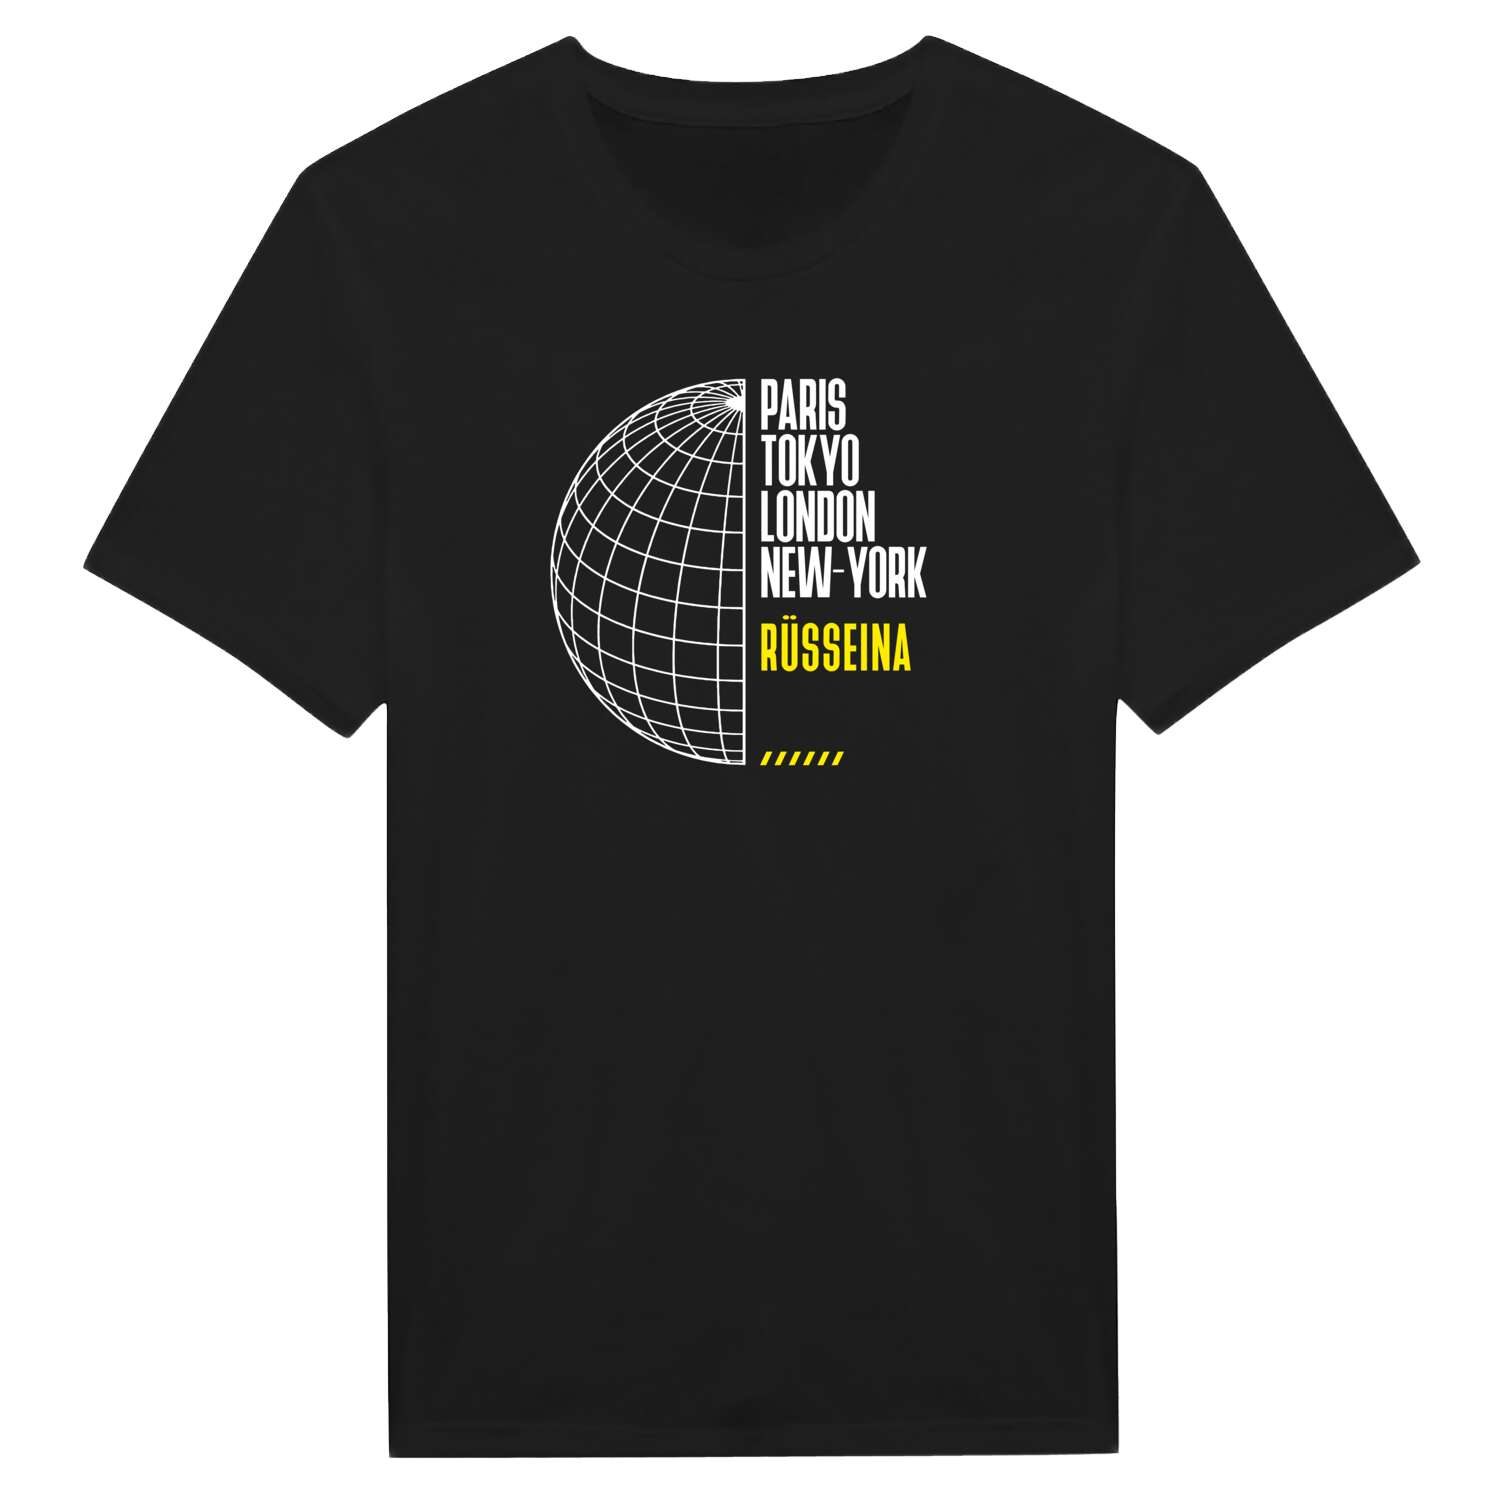 Rüsseina T-Shirt »Paris Tokyo London«